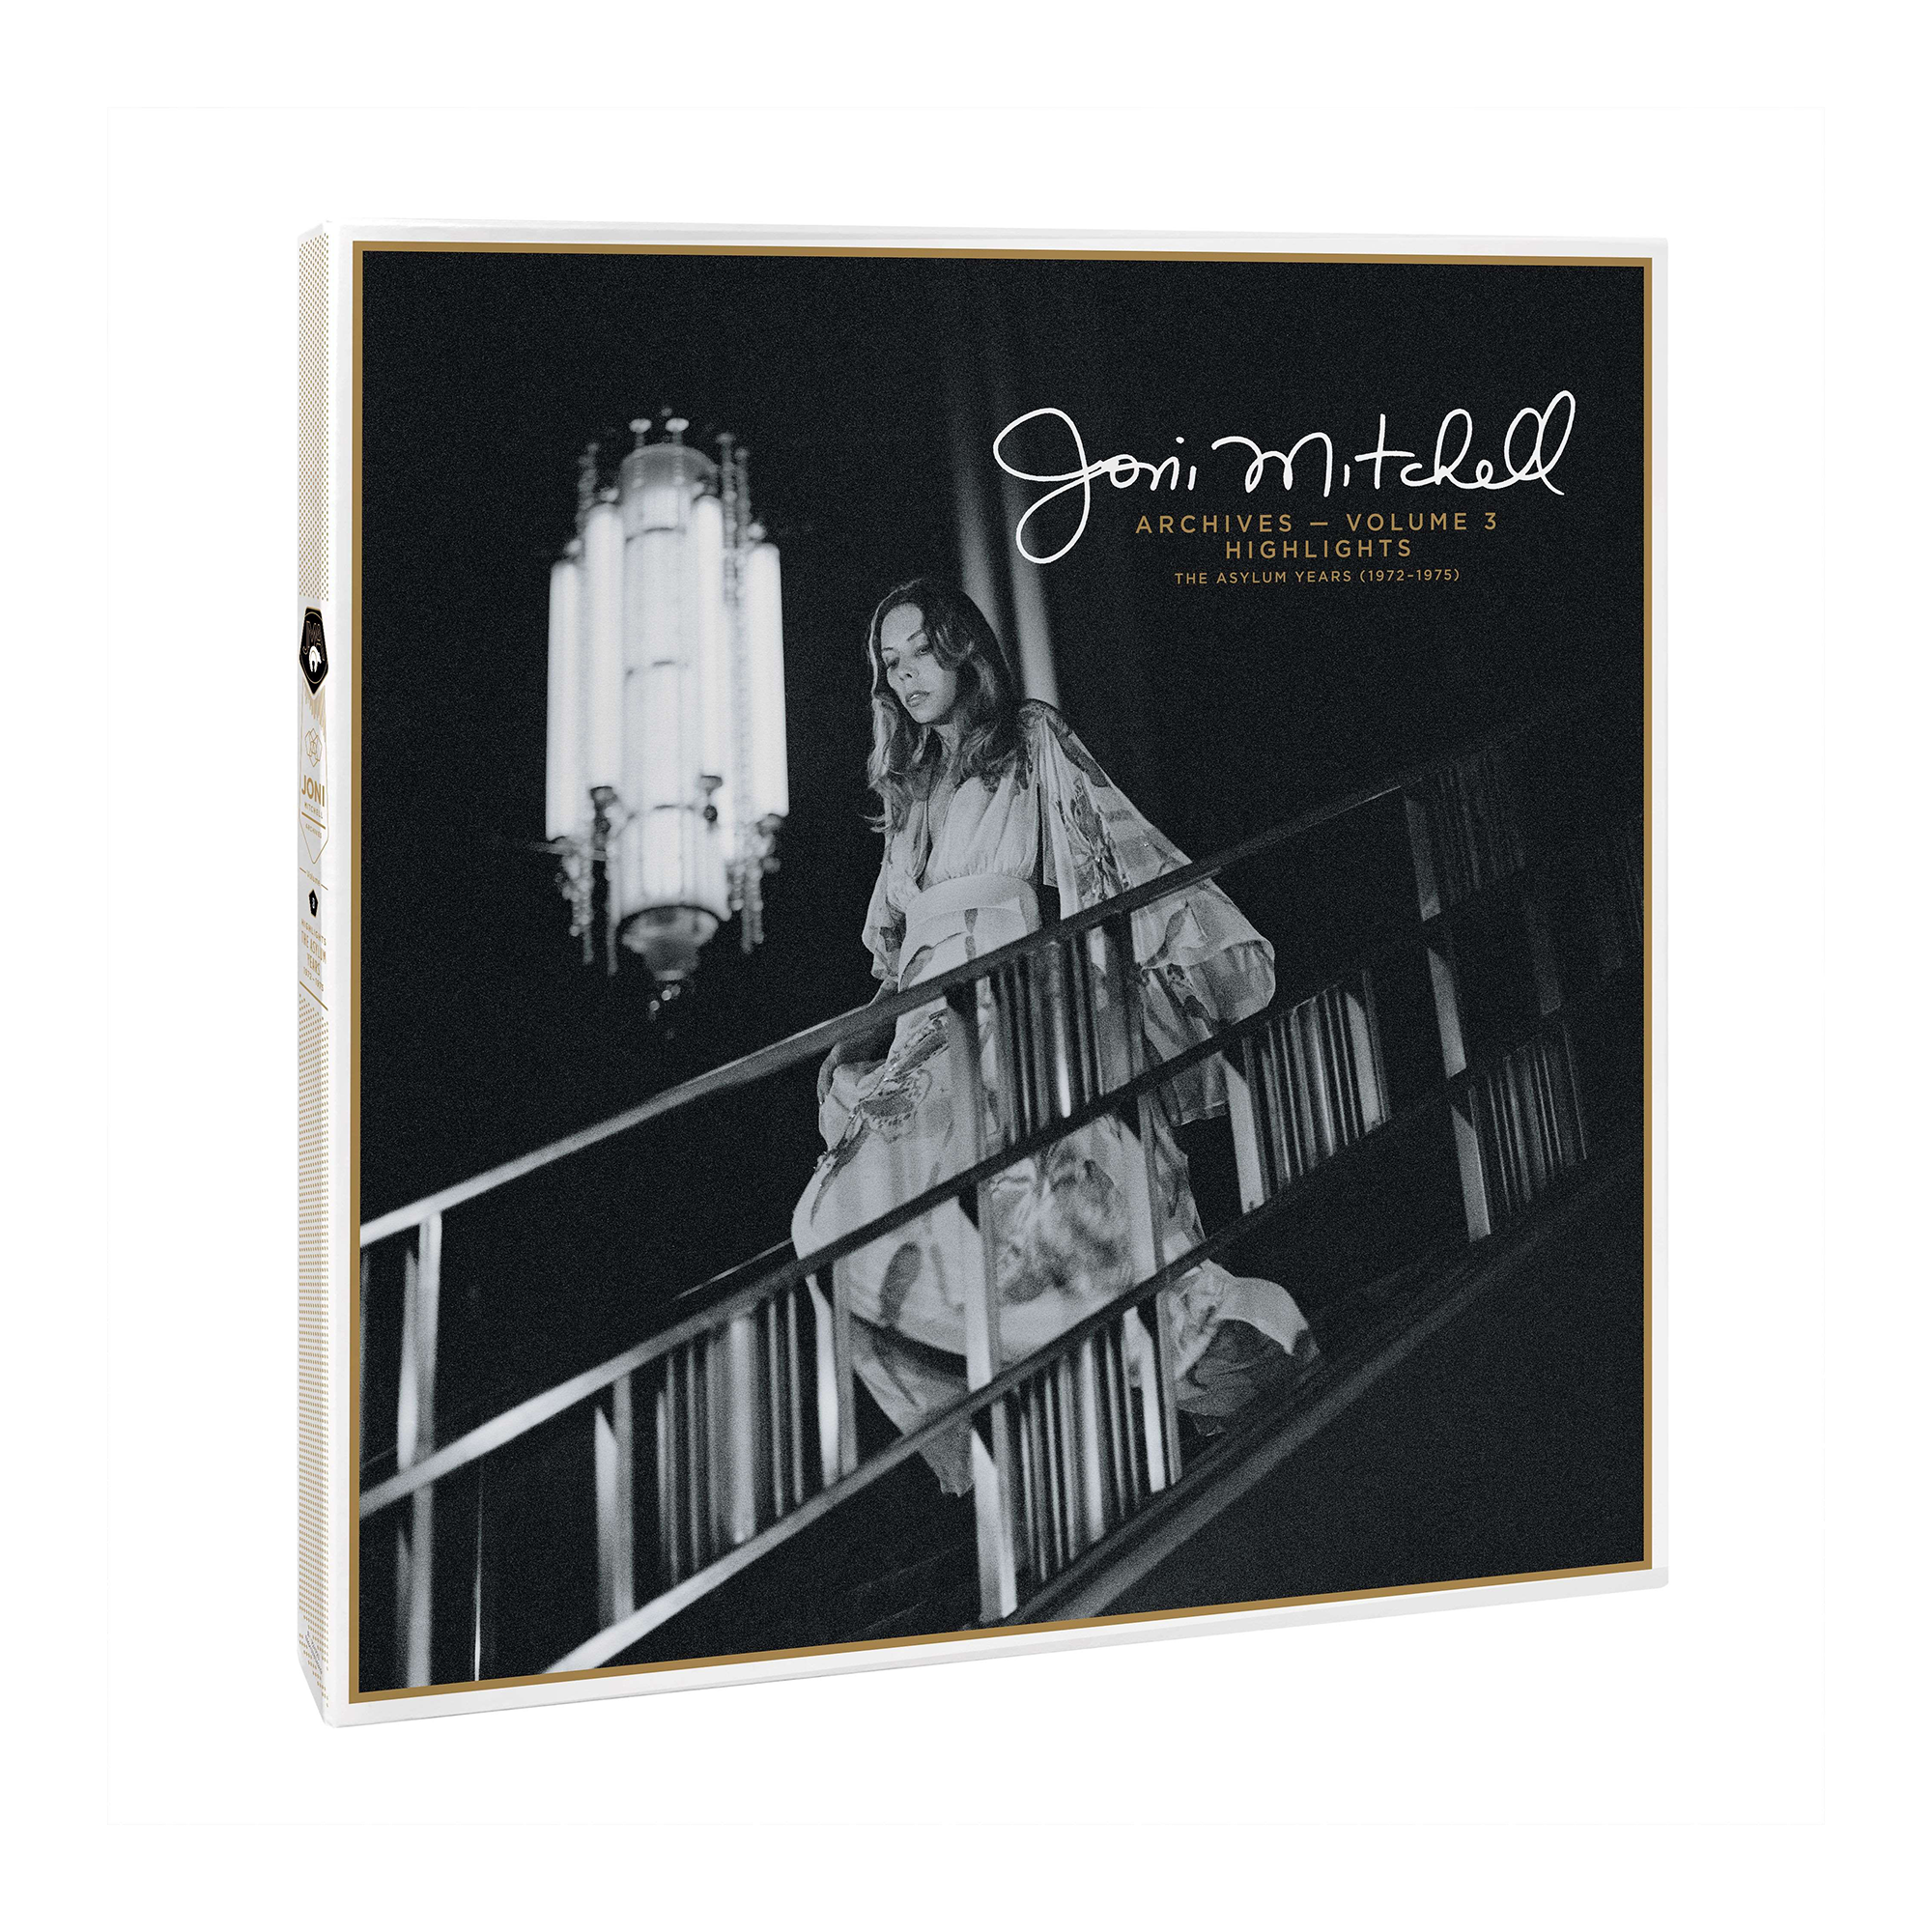 Joni Mitchell - Archives Vol. 3 - The Asylum Years (1972-1975): Limited 4LP Box Set